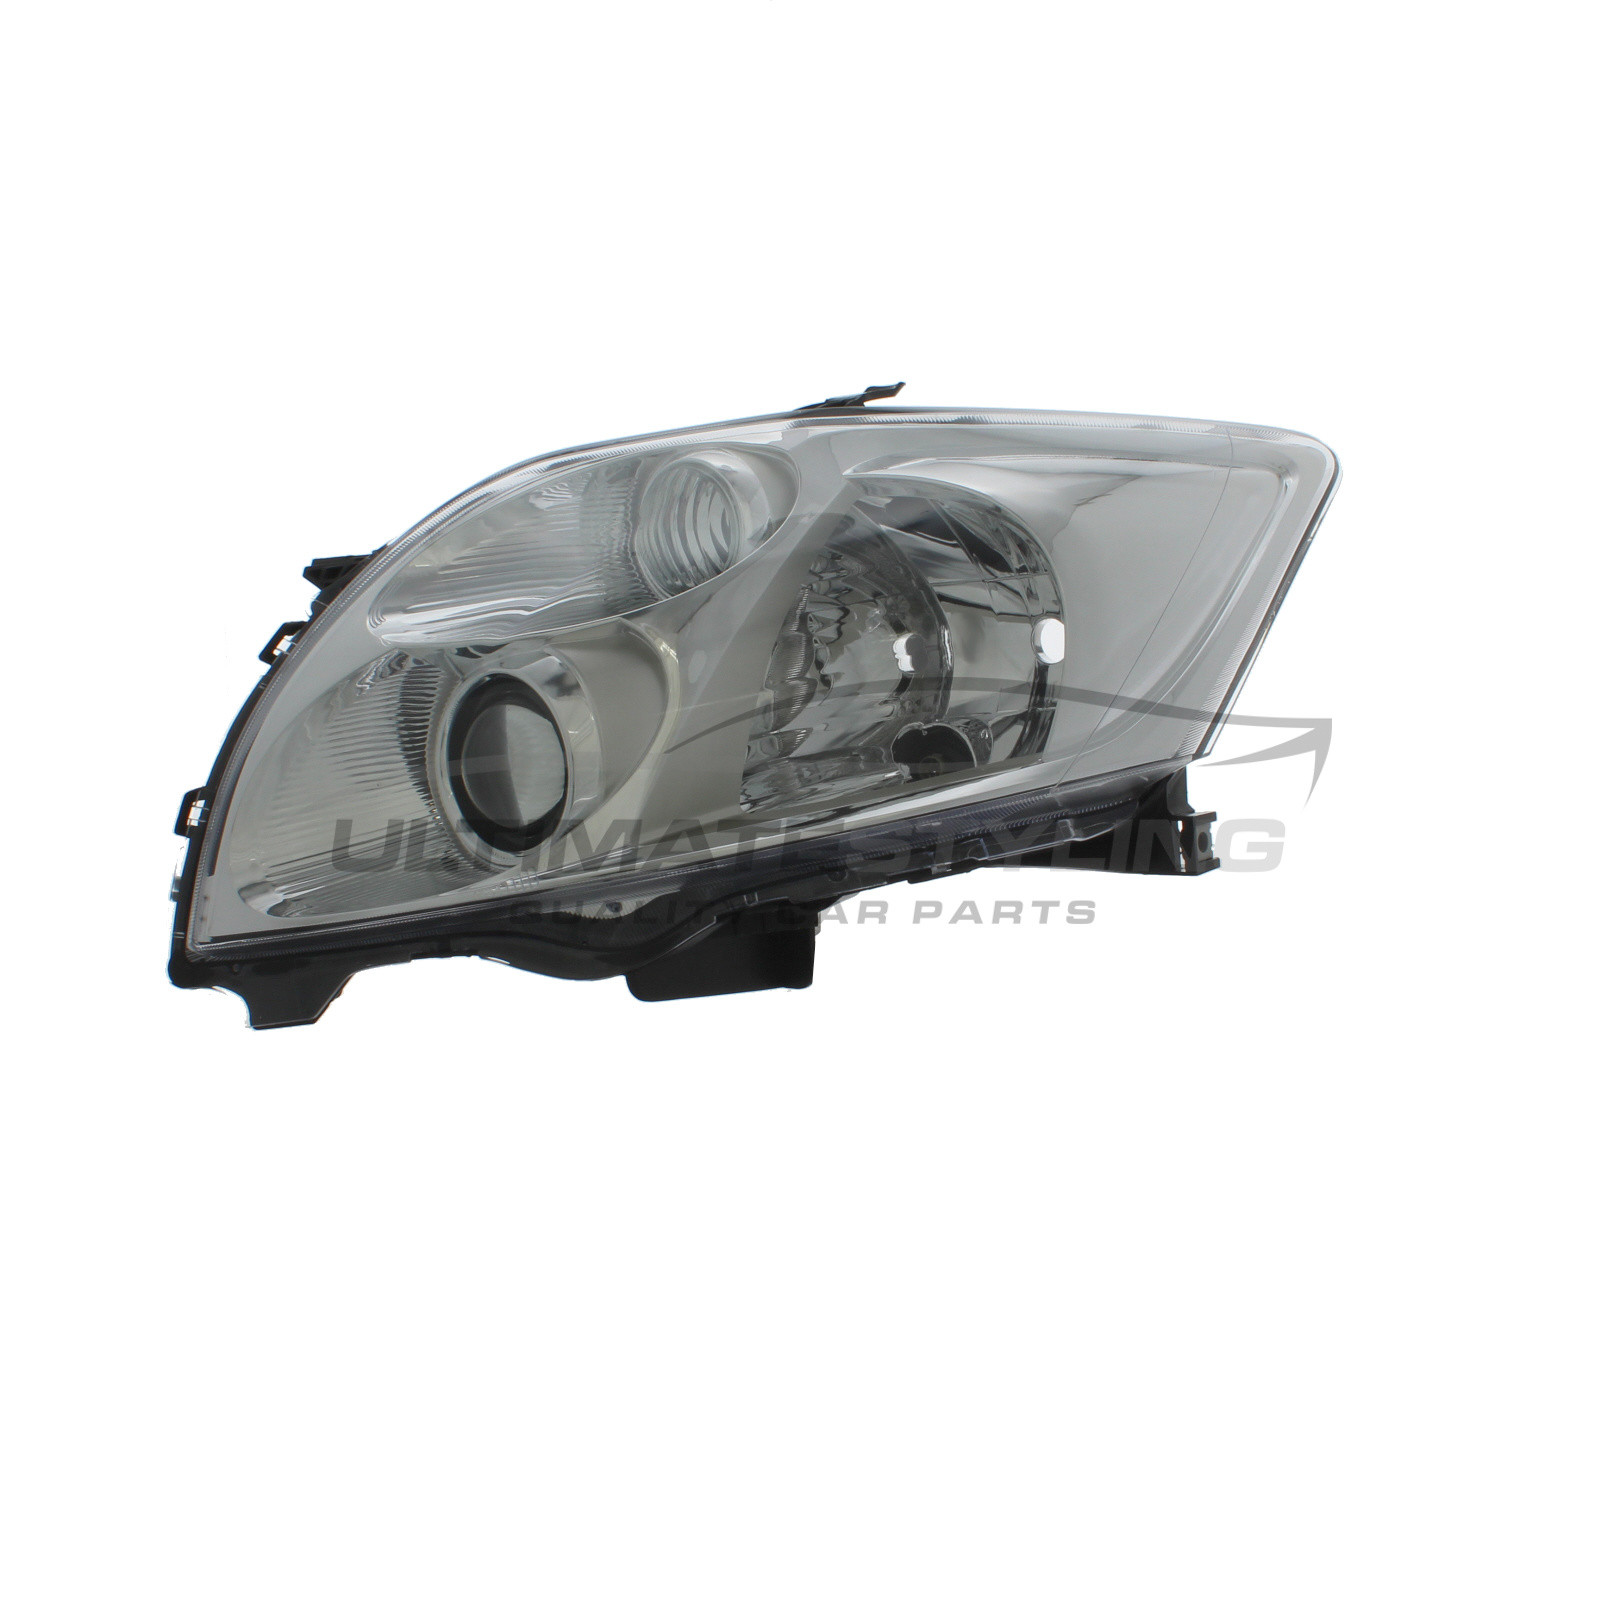 Toyota Auris 2006-2010 Halogen, Electric Without Motor, Chrome Headlight / Headlamp Passengers Side (LH)